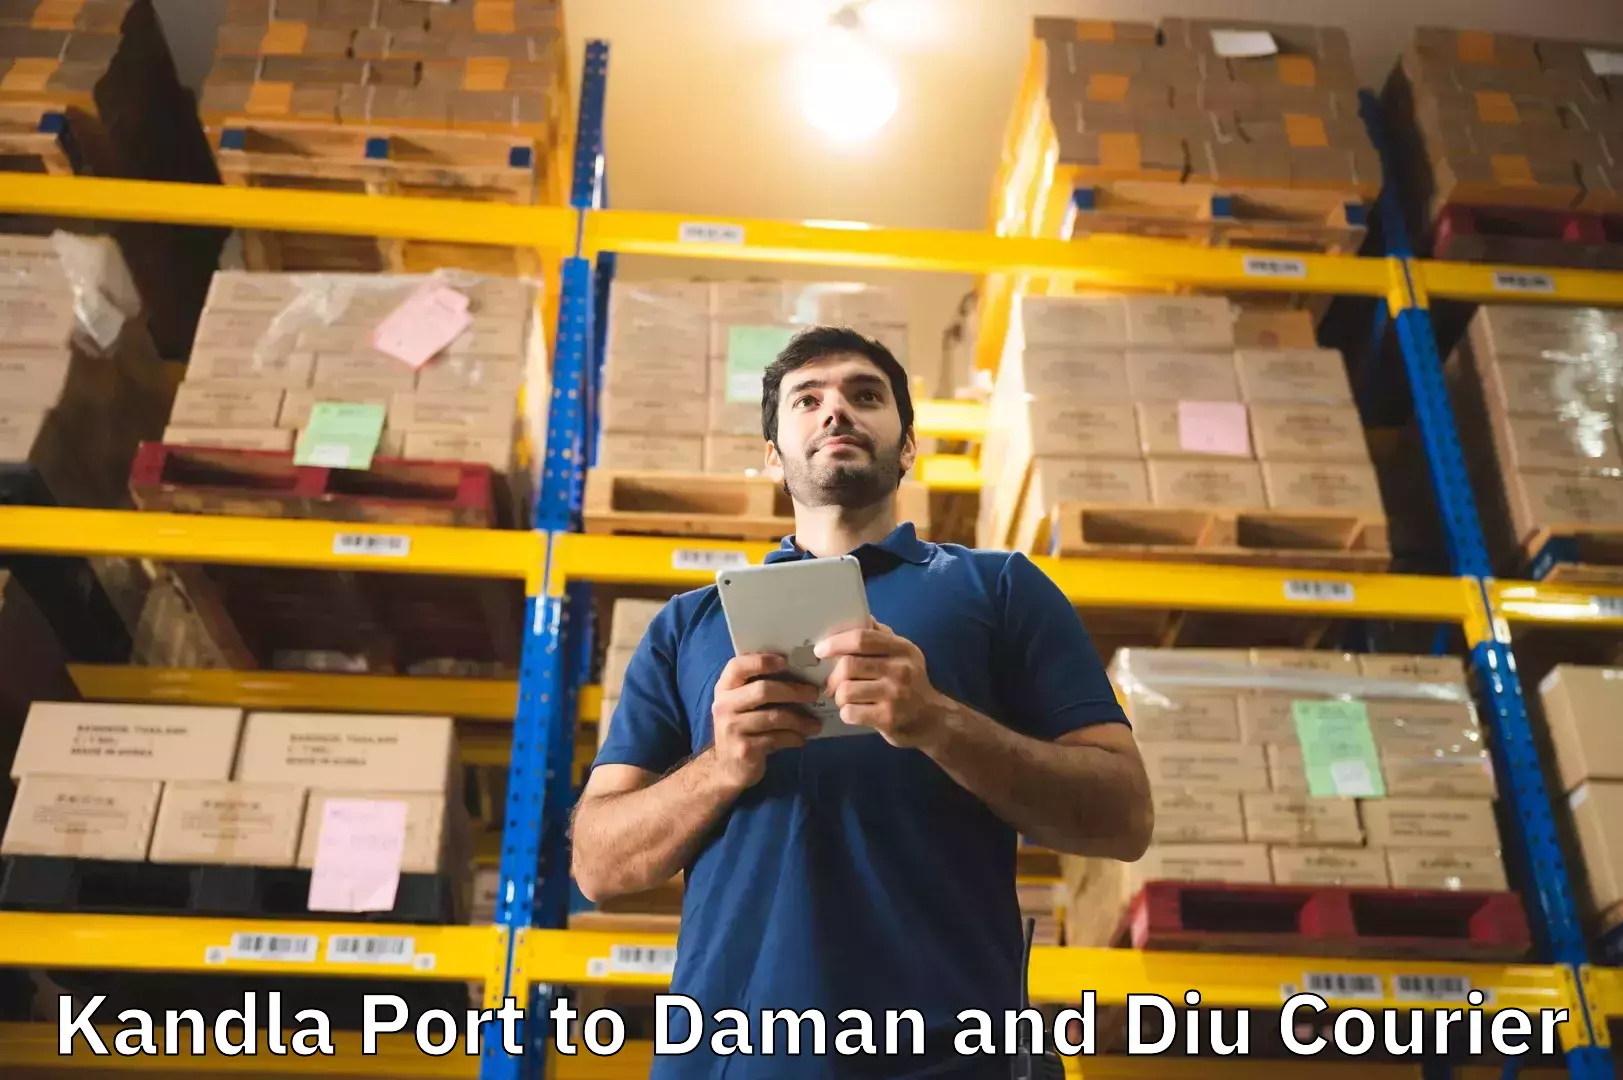 Luggage shipment tracking Kandla Port to Diu